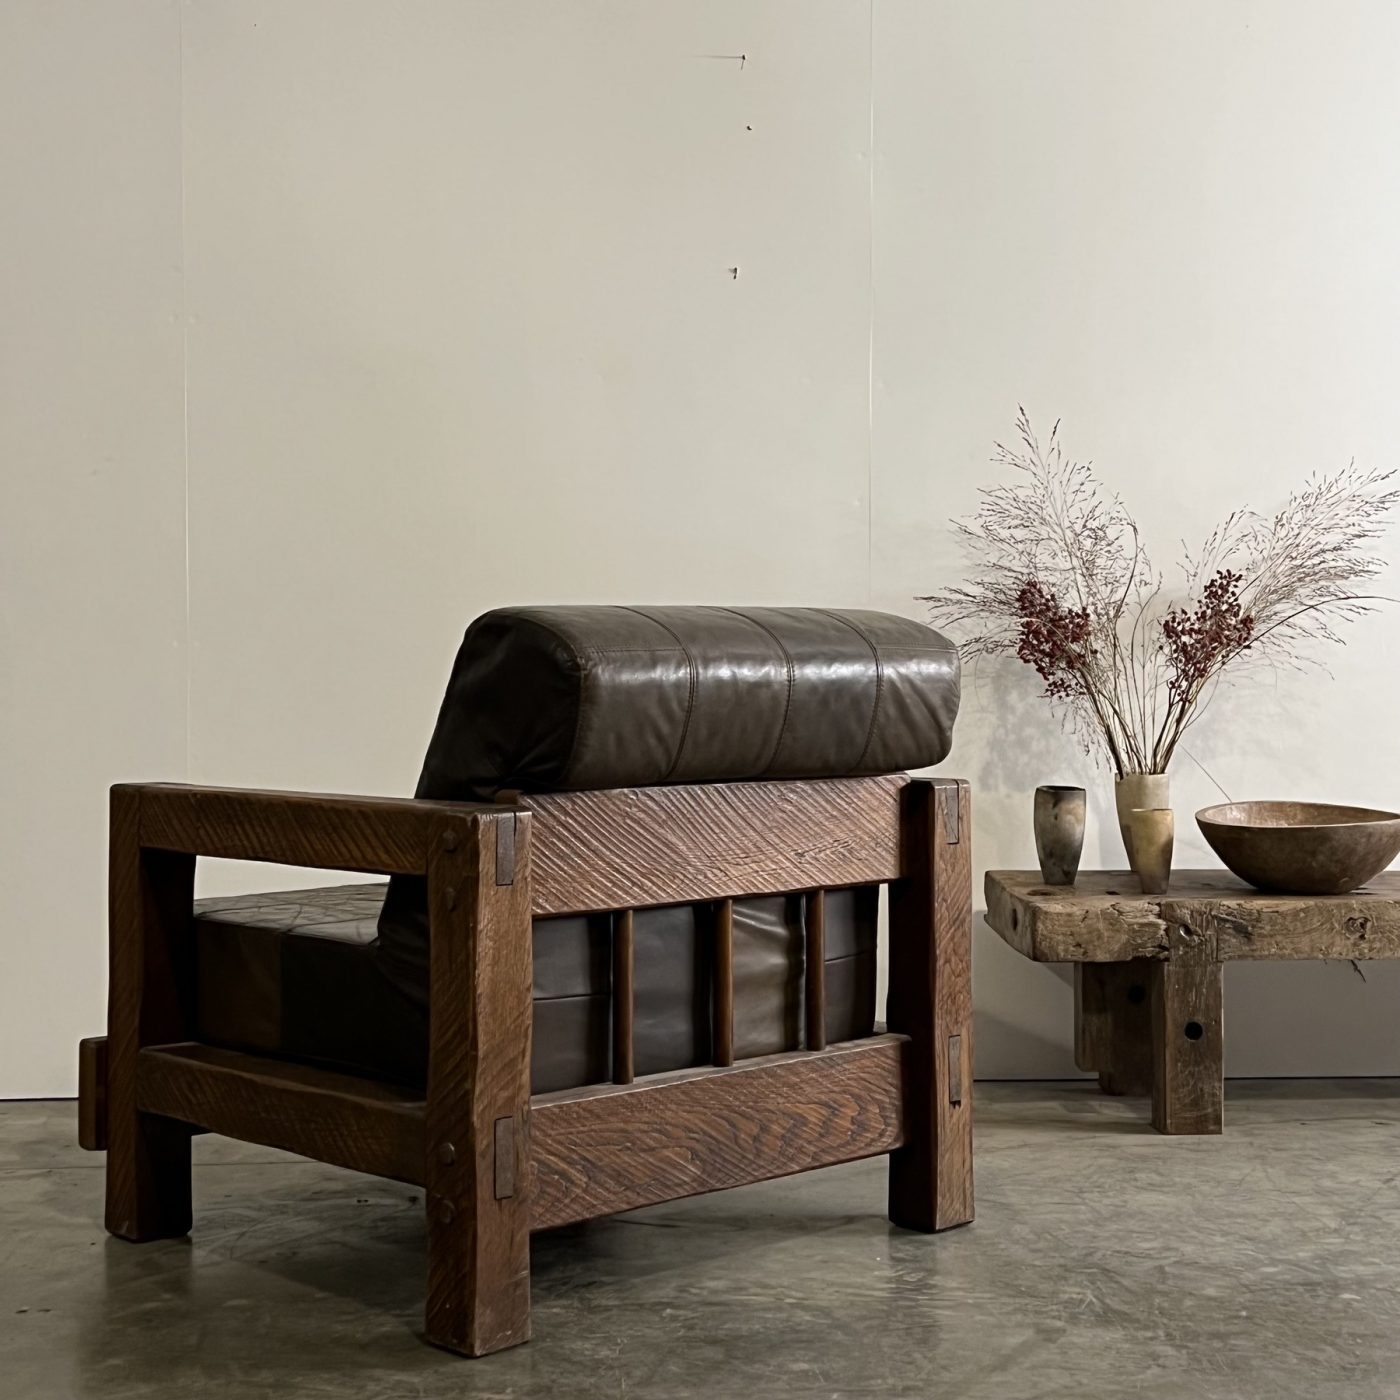 objet-vagabond-leather-armchair0010